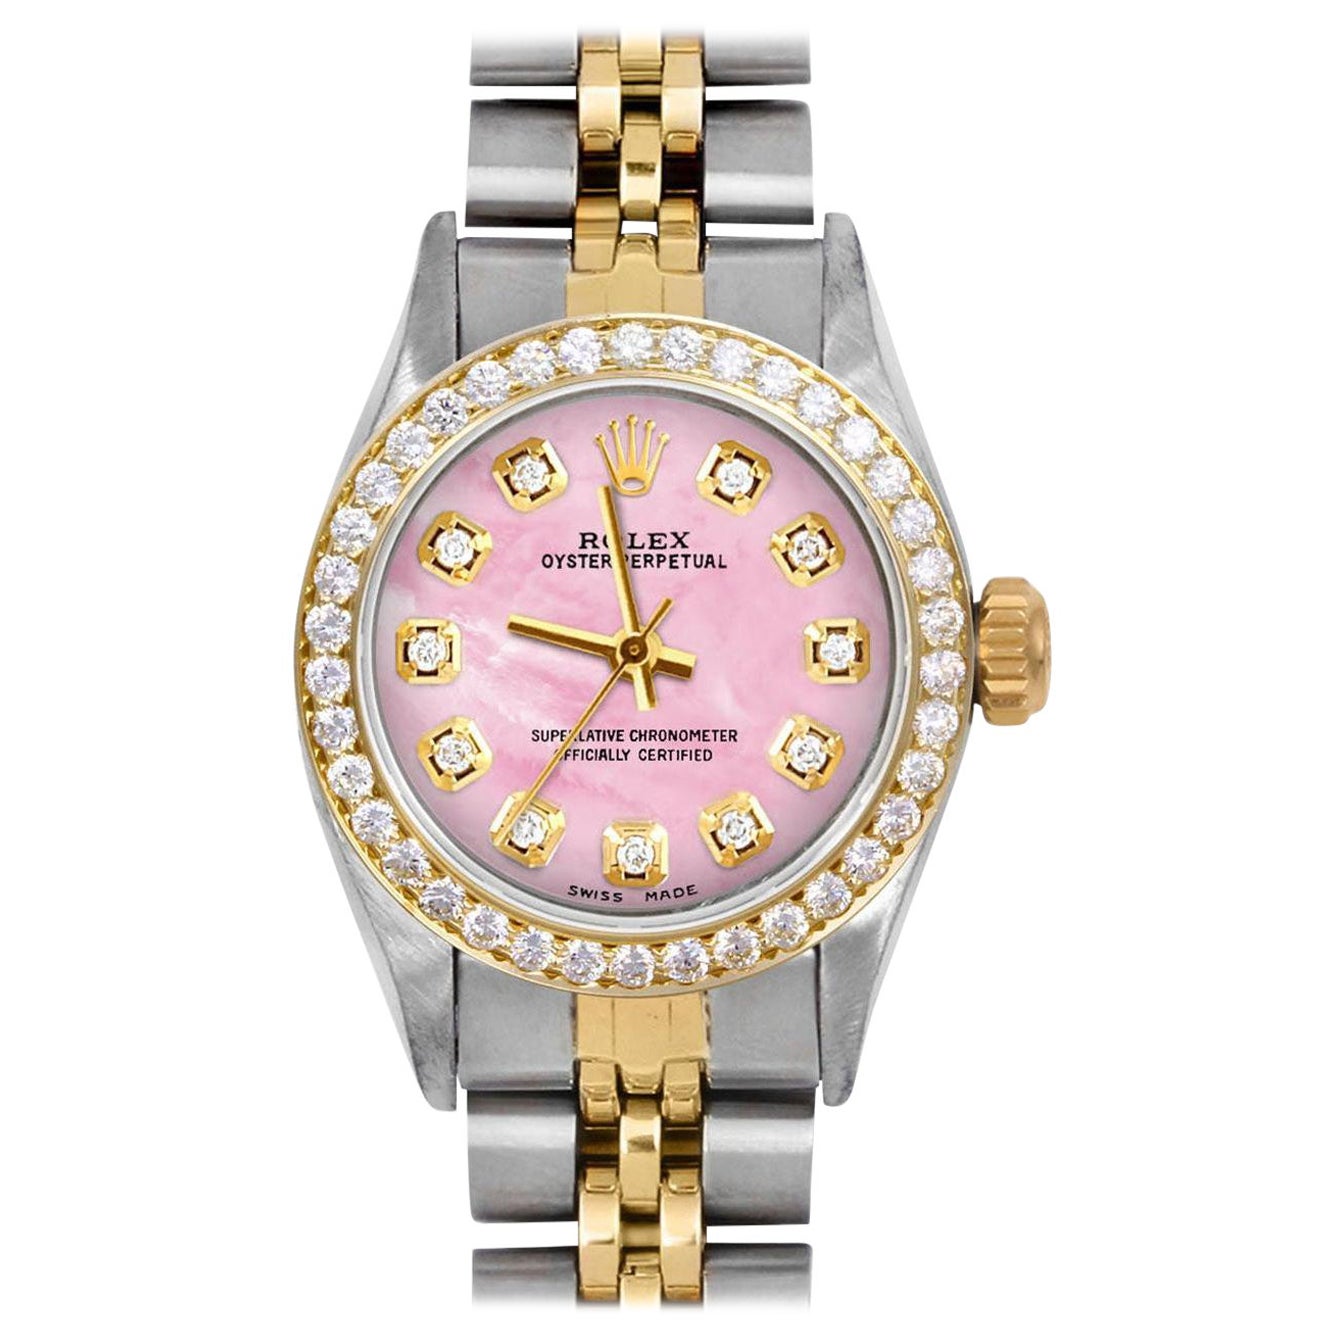 Rolex Ladies TT Oyster Perpetual Pink MOP Diamond Dial Diamond Bezel Watch